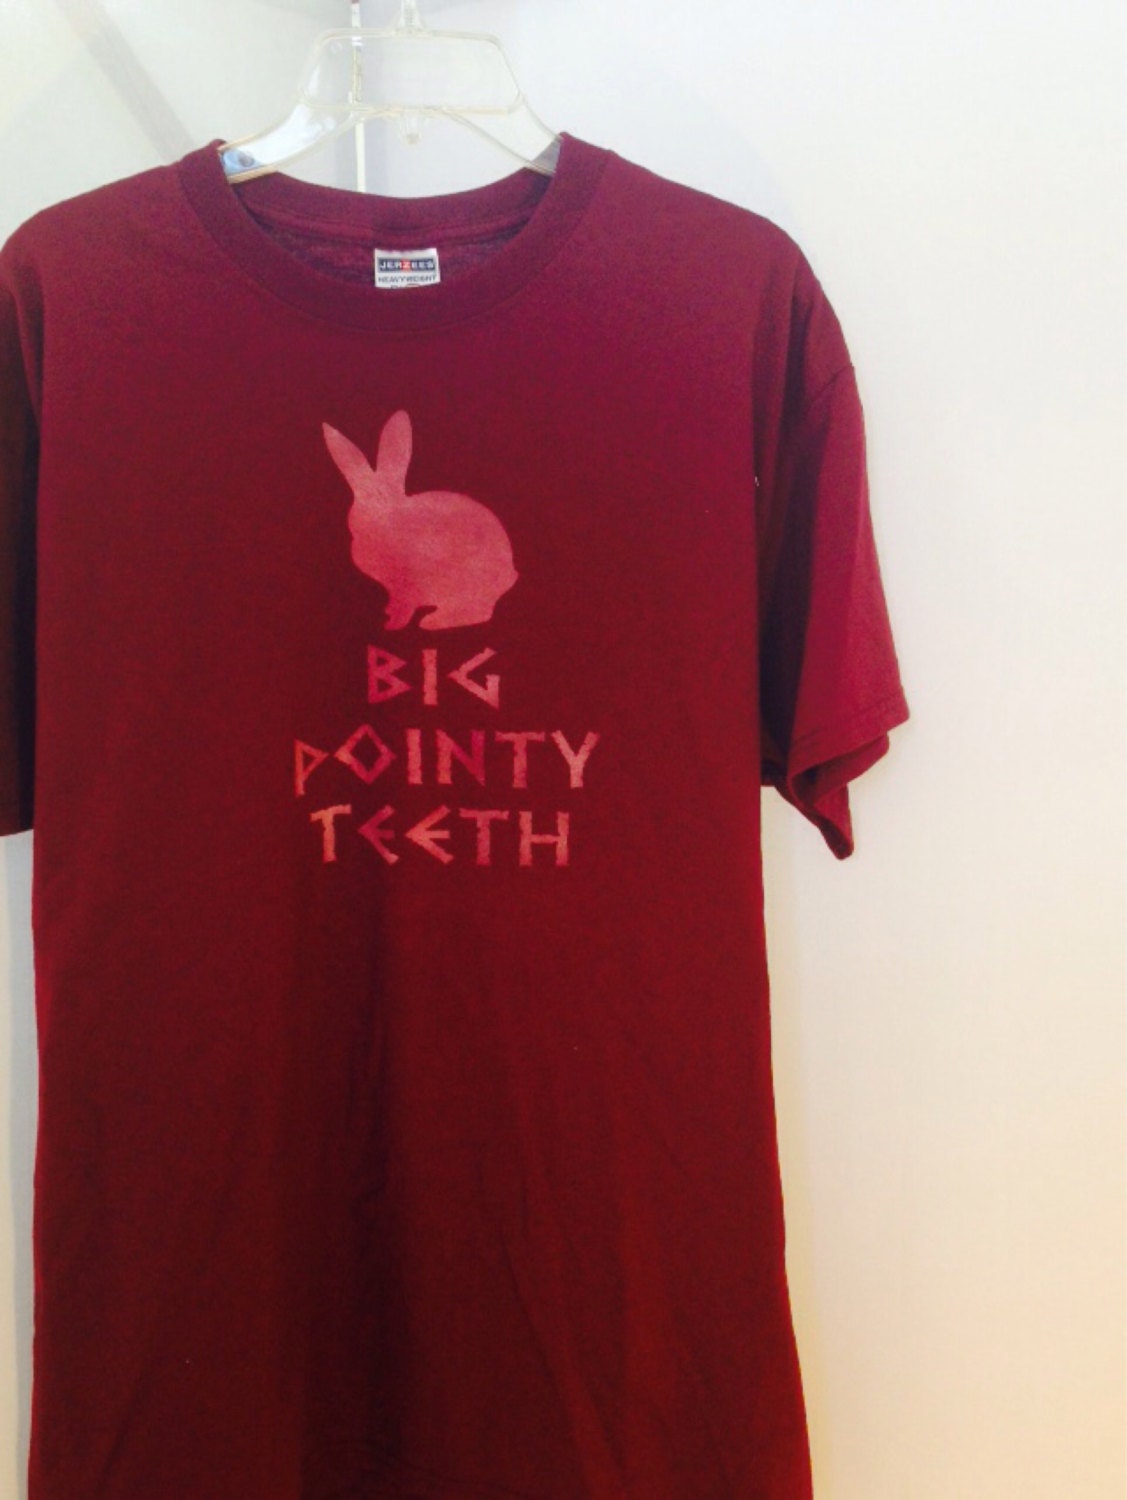 Big Pointy Teeth Bunny Rabbit Monty Python Holy Grail John